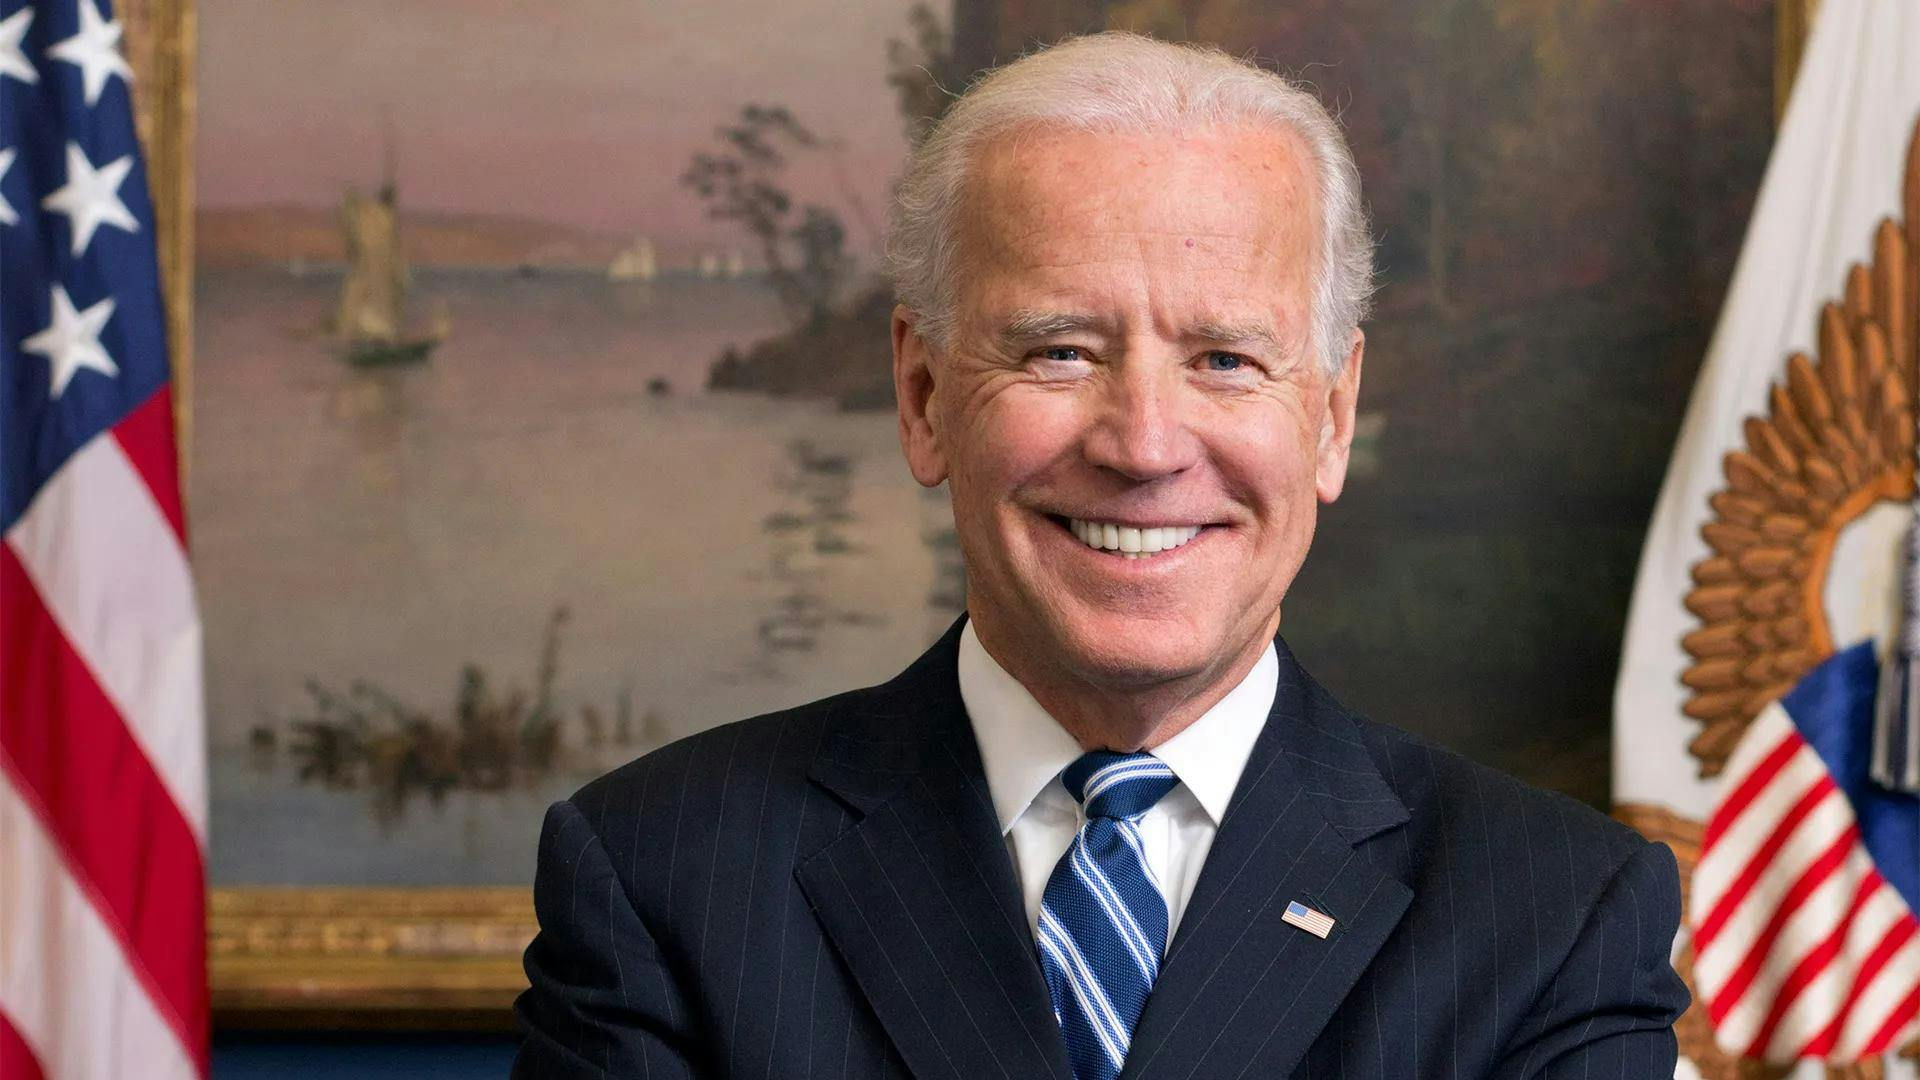 ESFJ personality Joe Biden